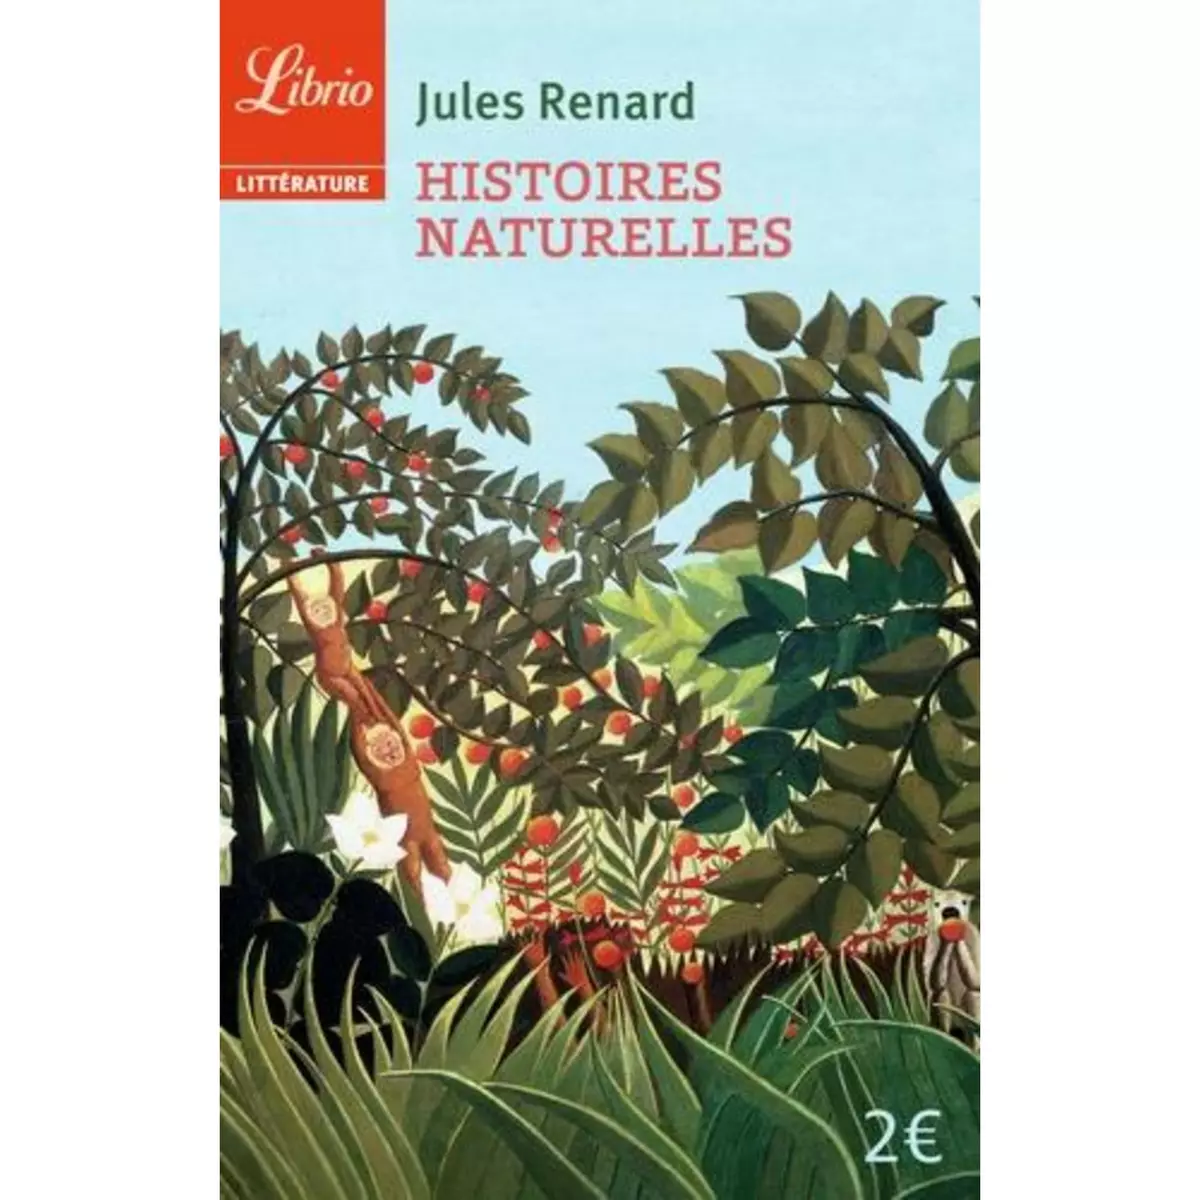  HISTOIRES NATURELLES, Renard Jules